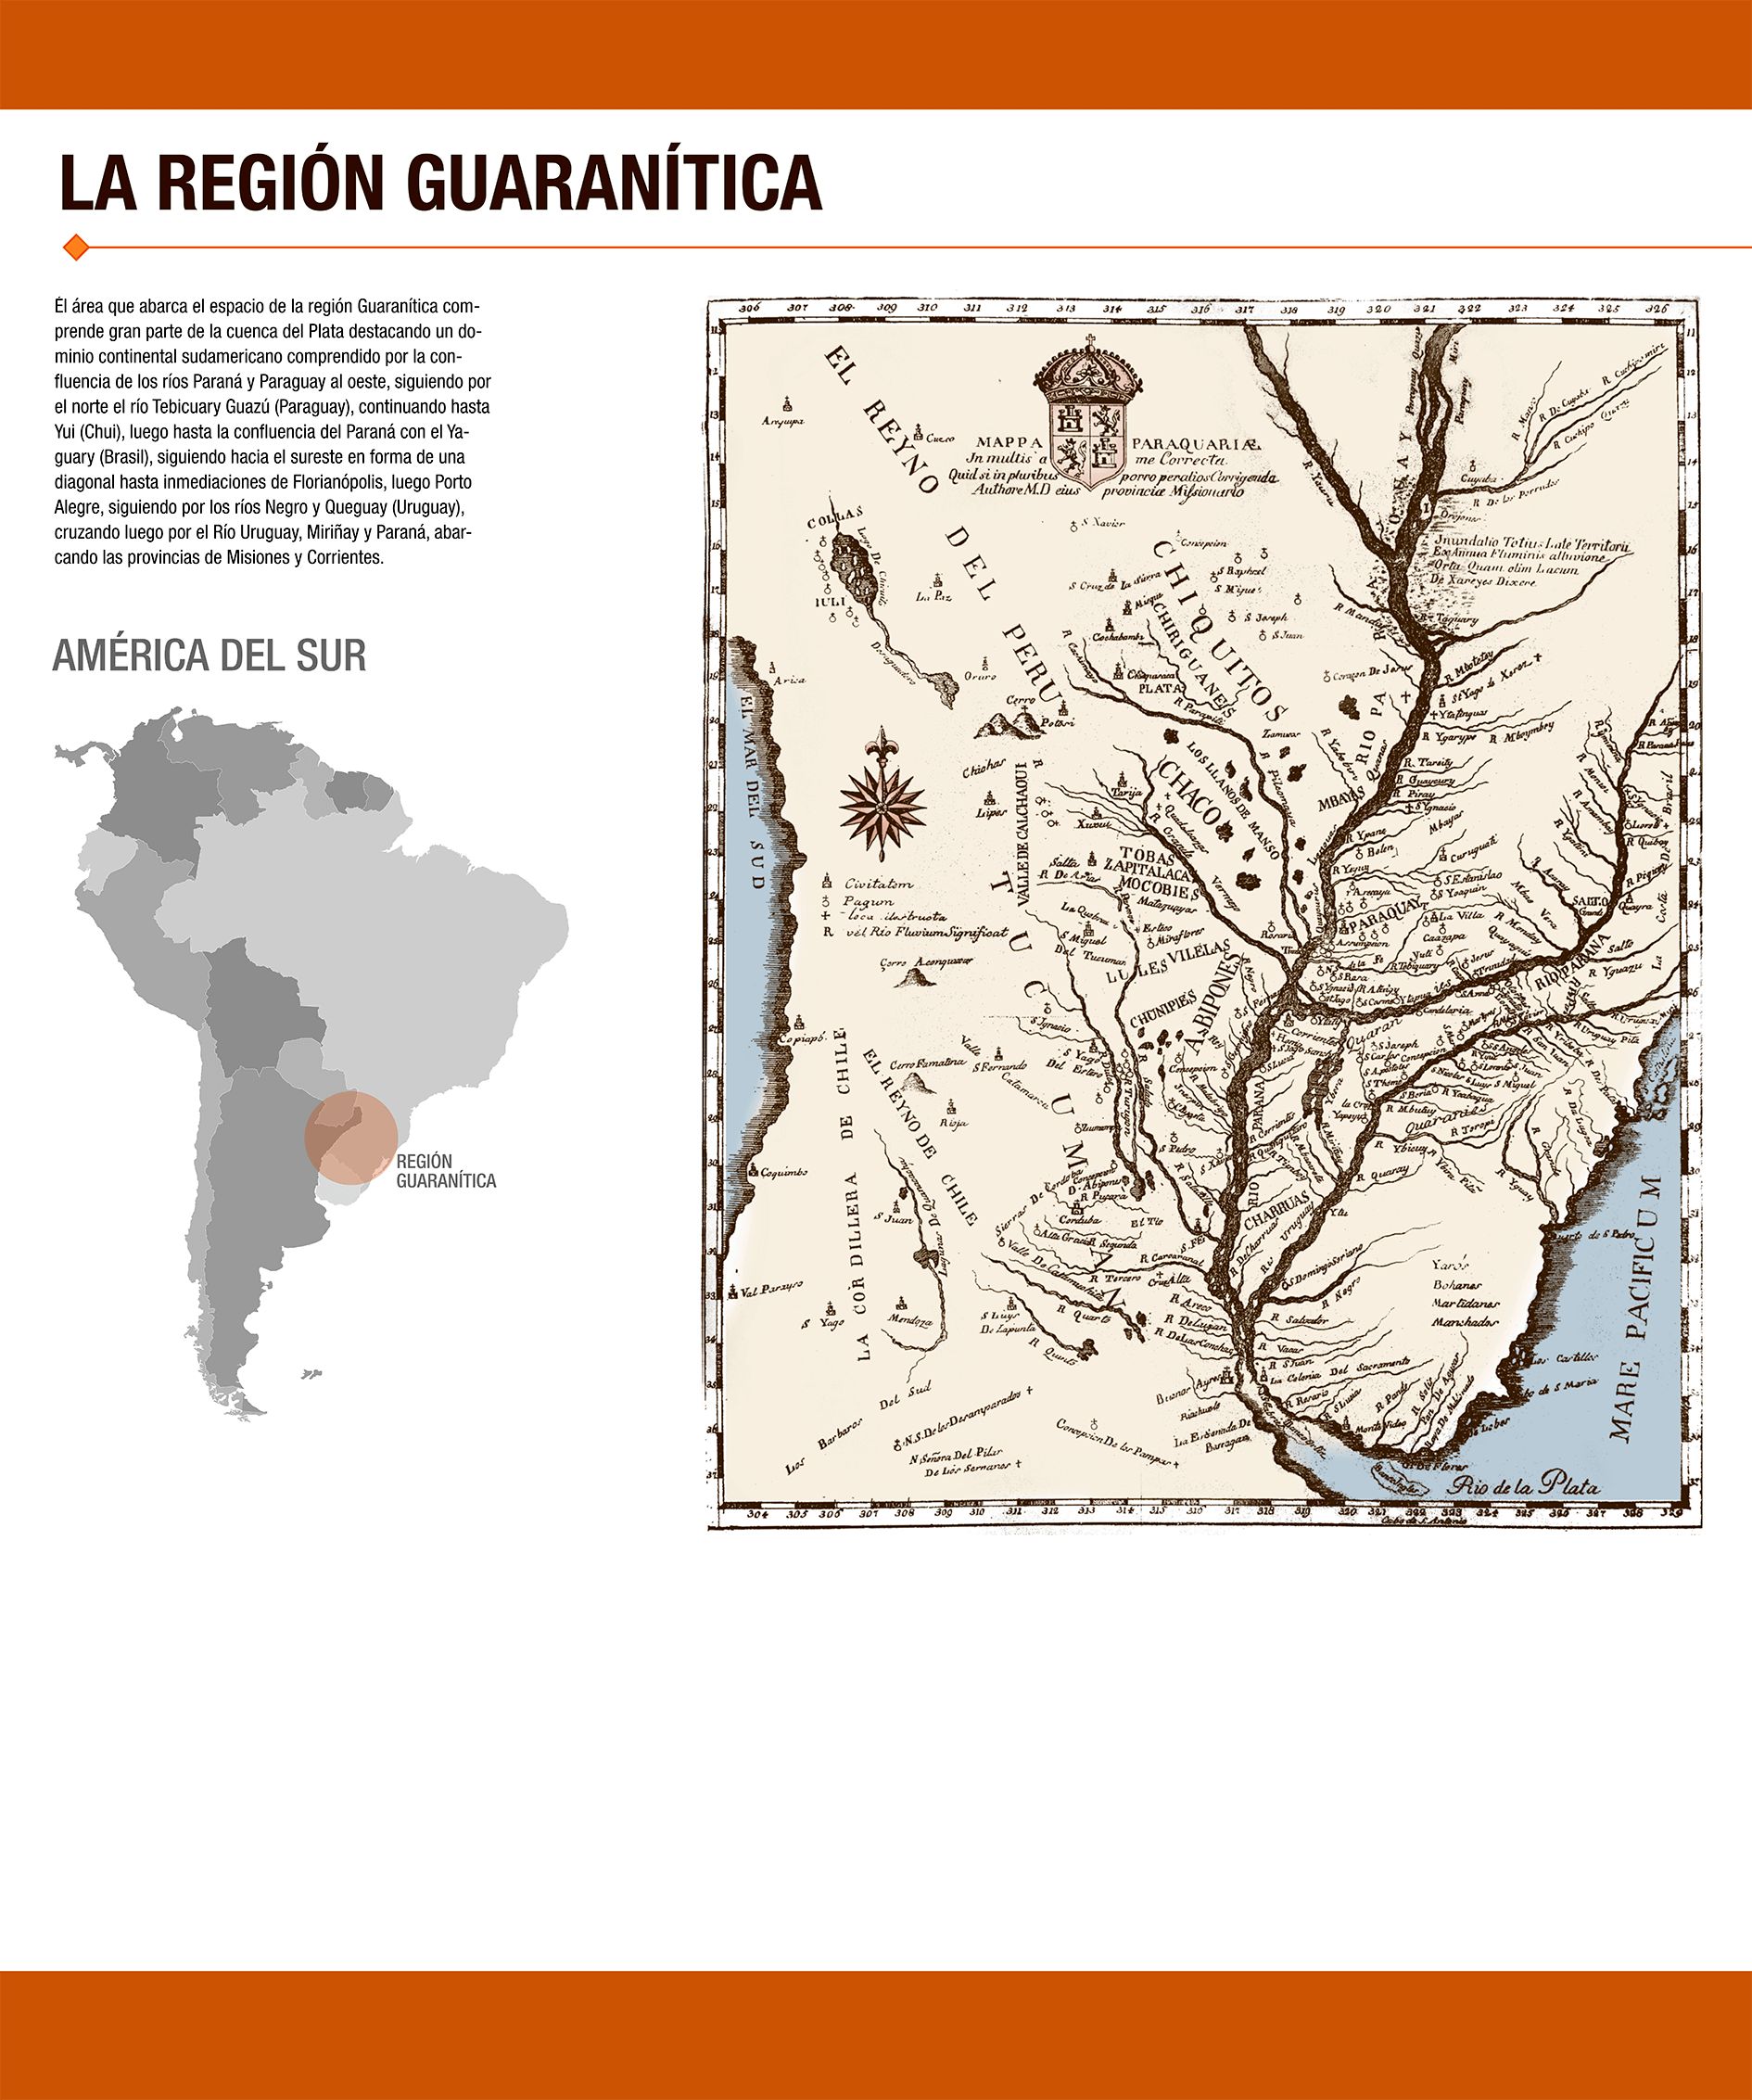 La Región Guaranítica